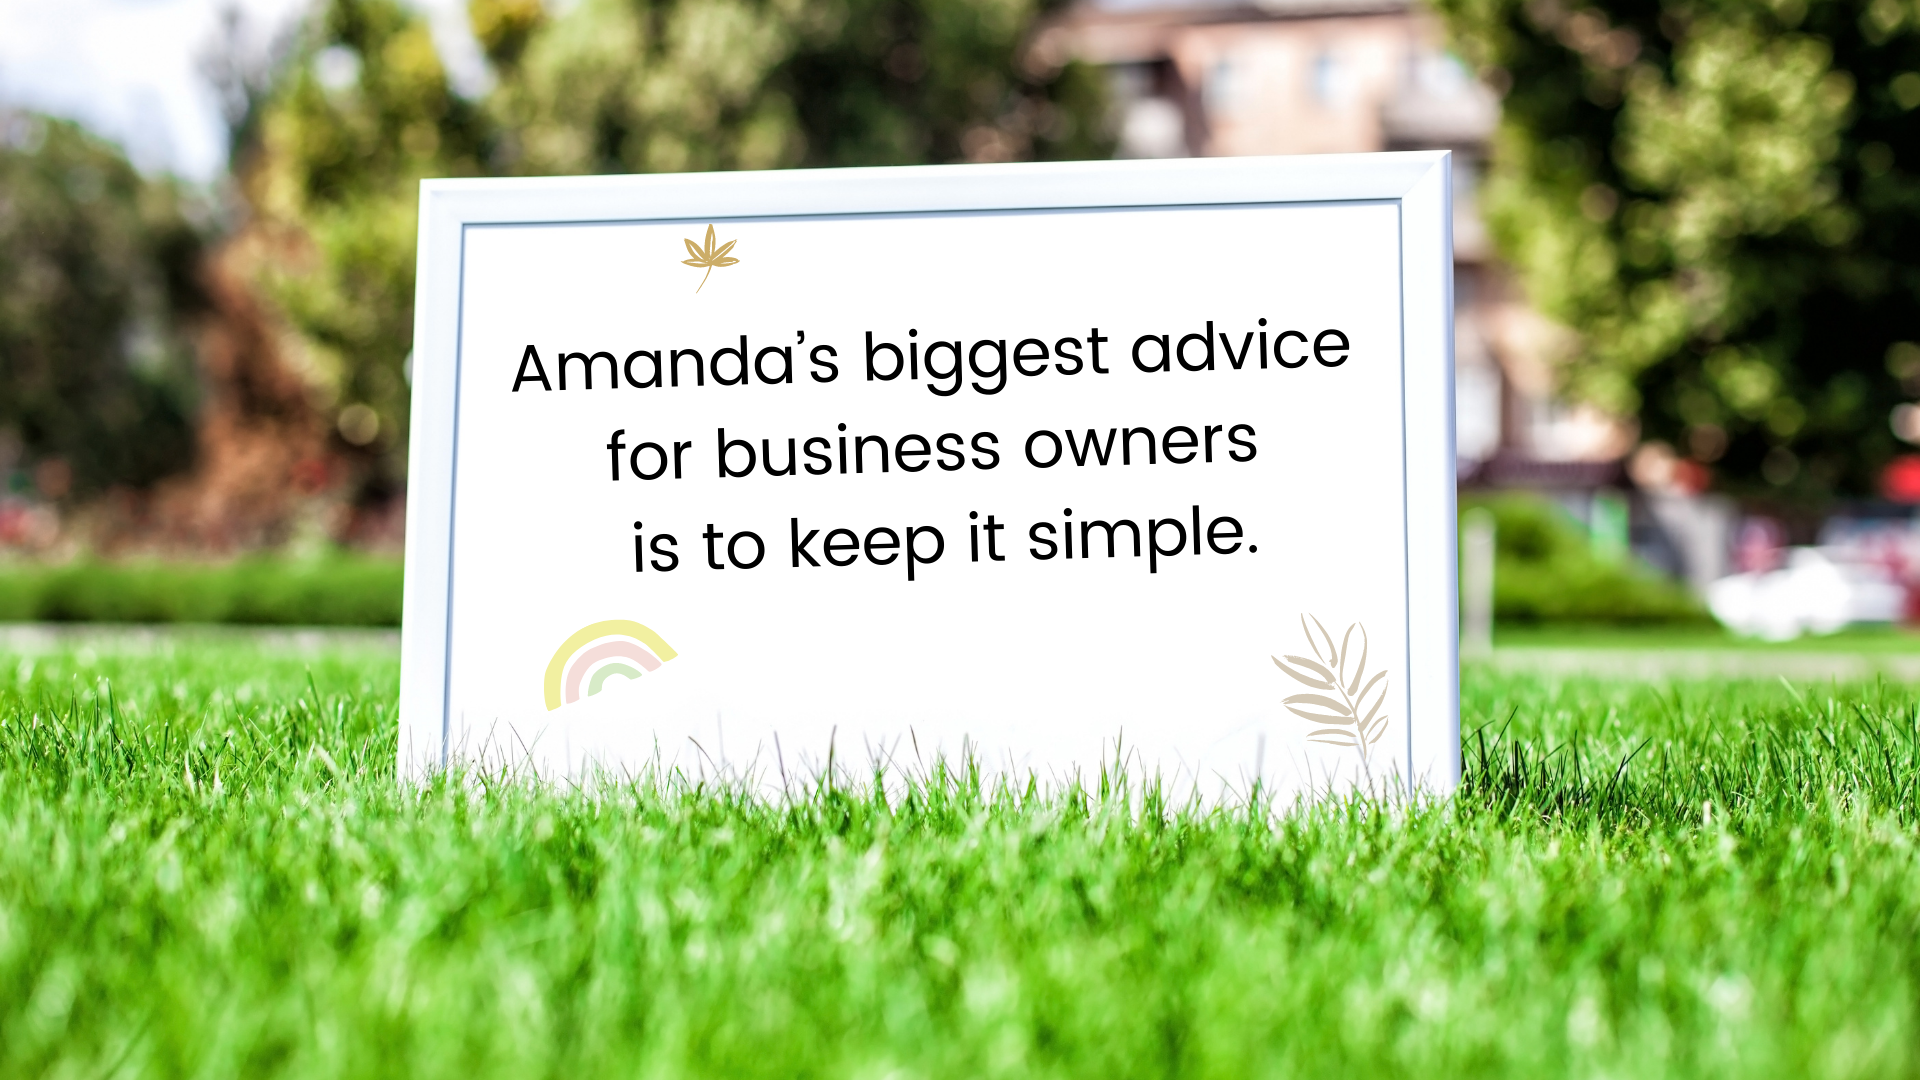 Amandas biggest advice